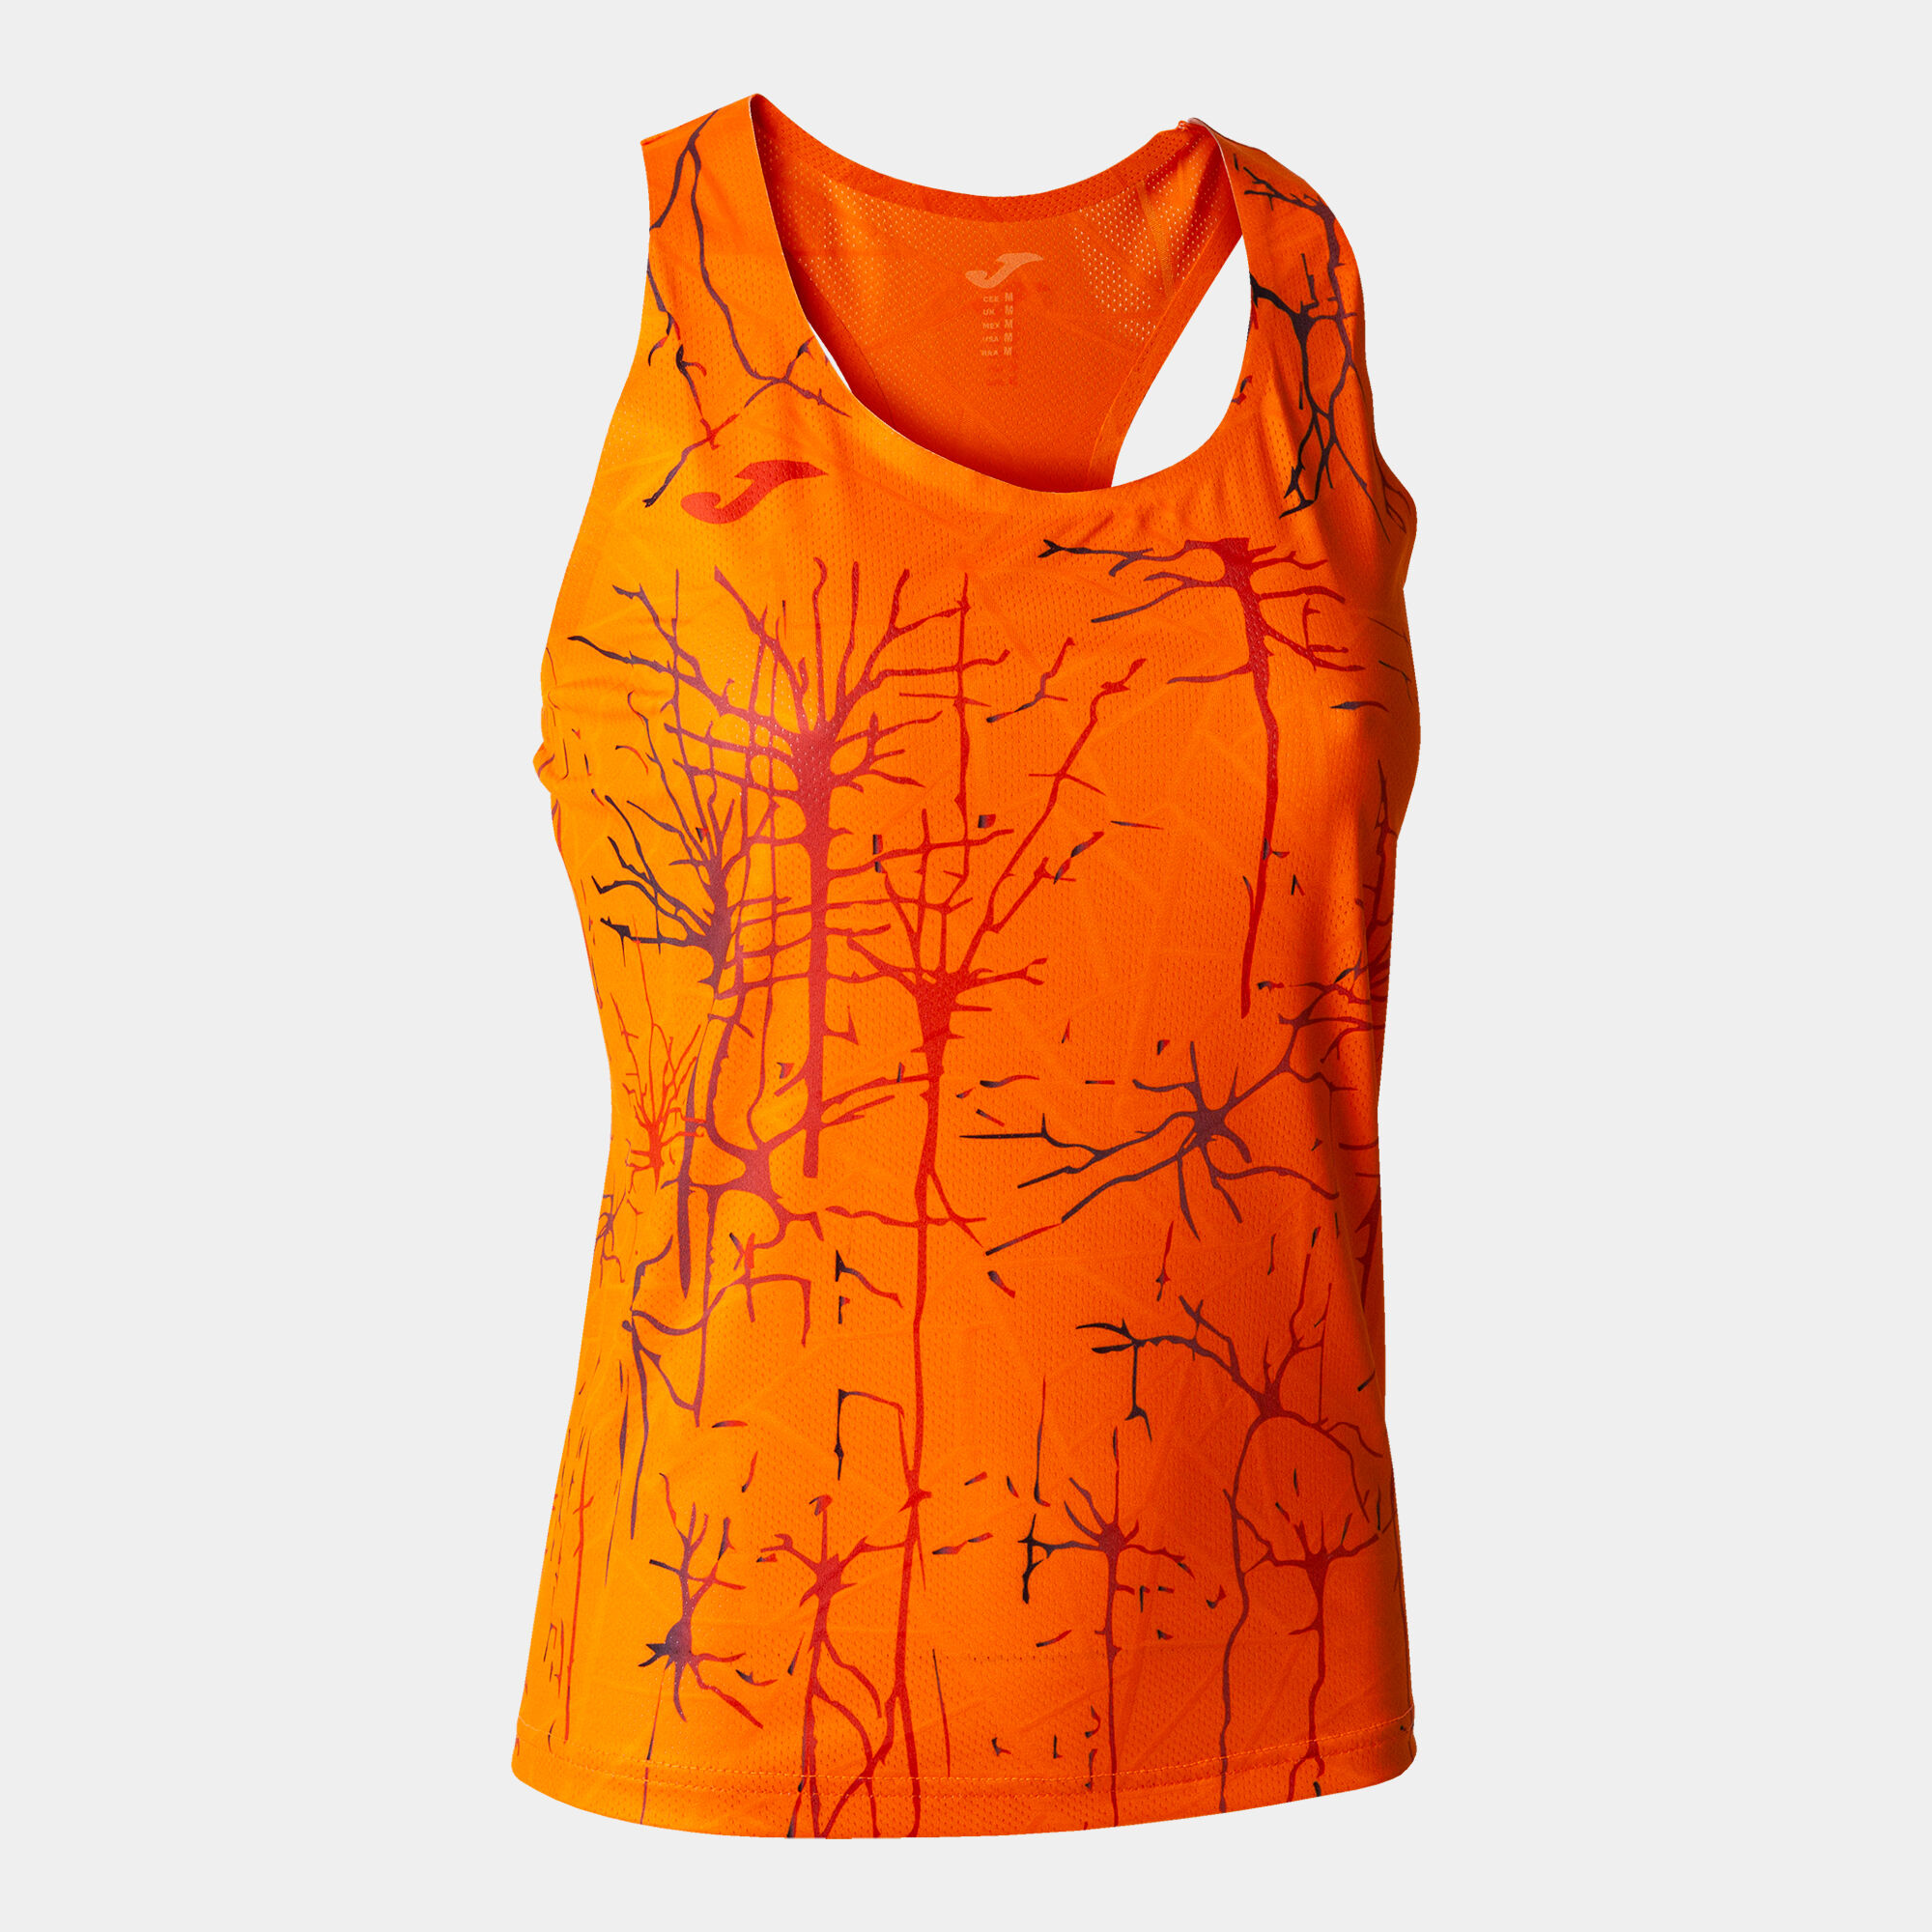 Camiseta tirantes mujer Elite IX naranja